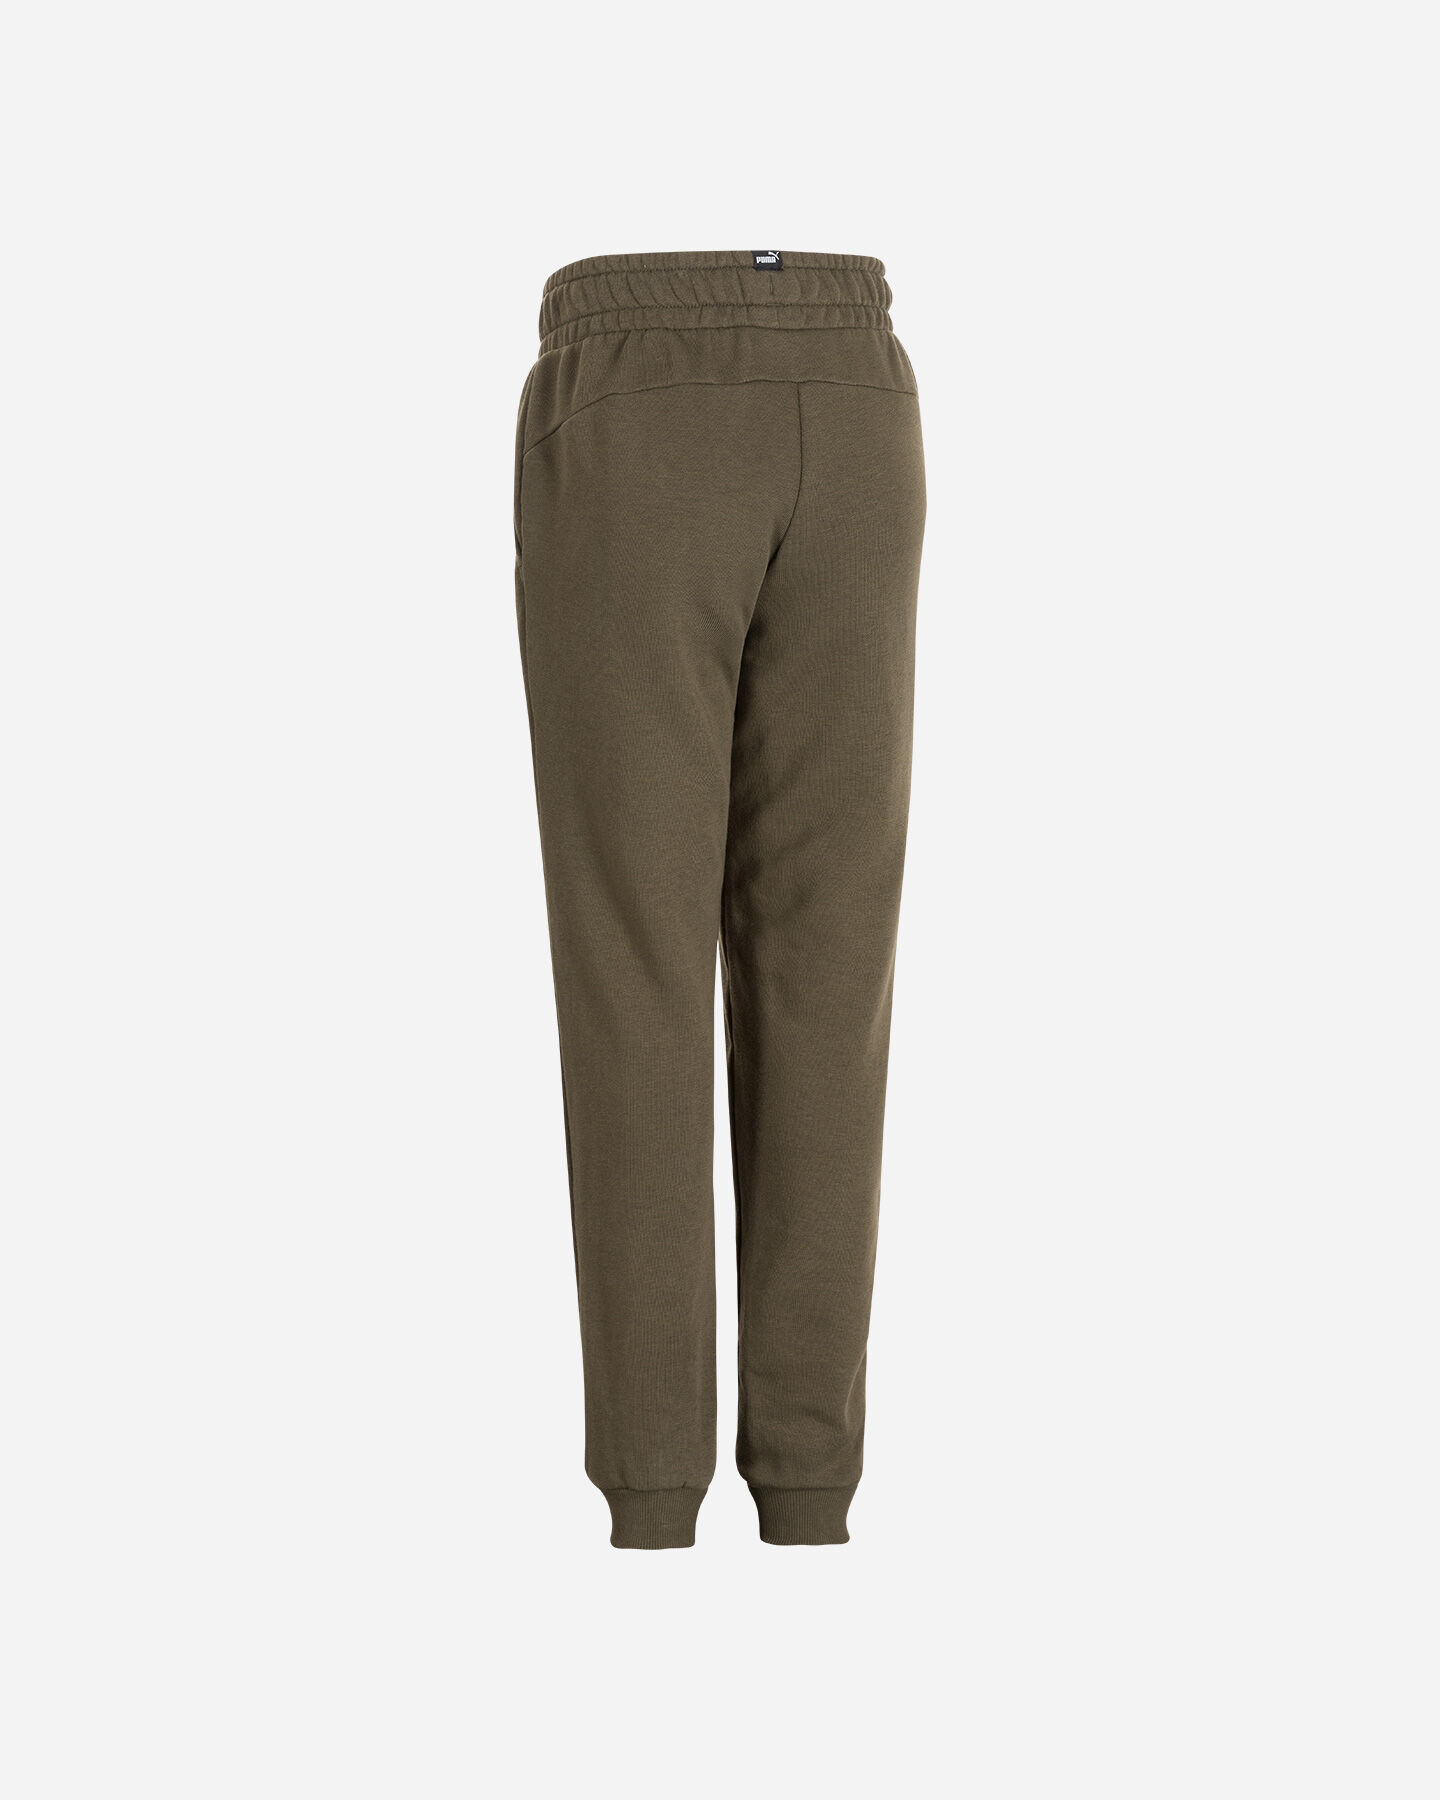  Pantalone PUMA BASIC JR S5339161 scatto 1